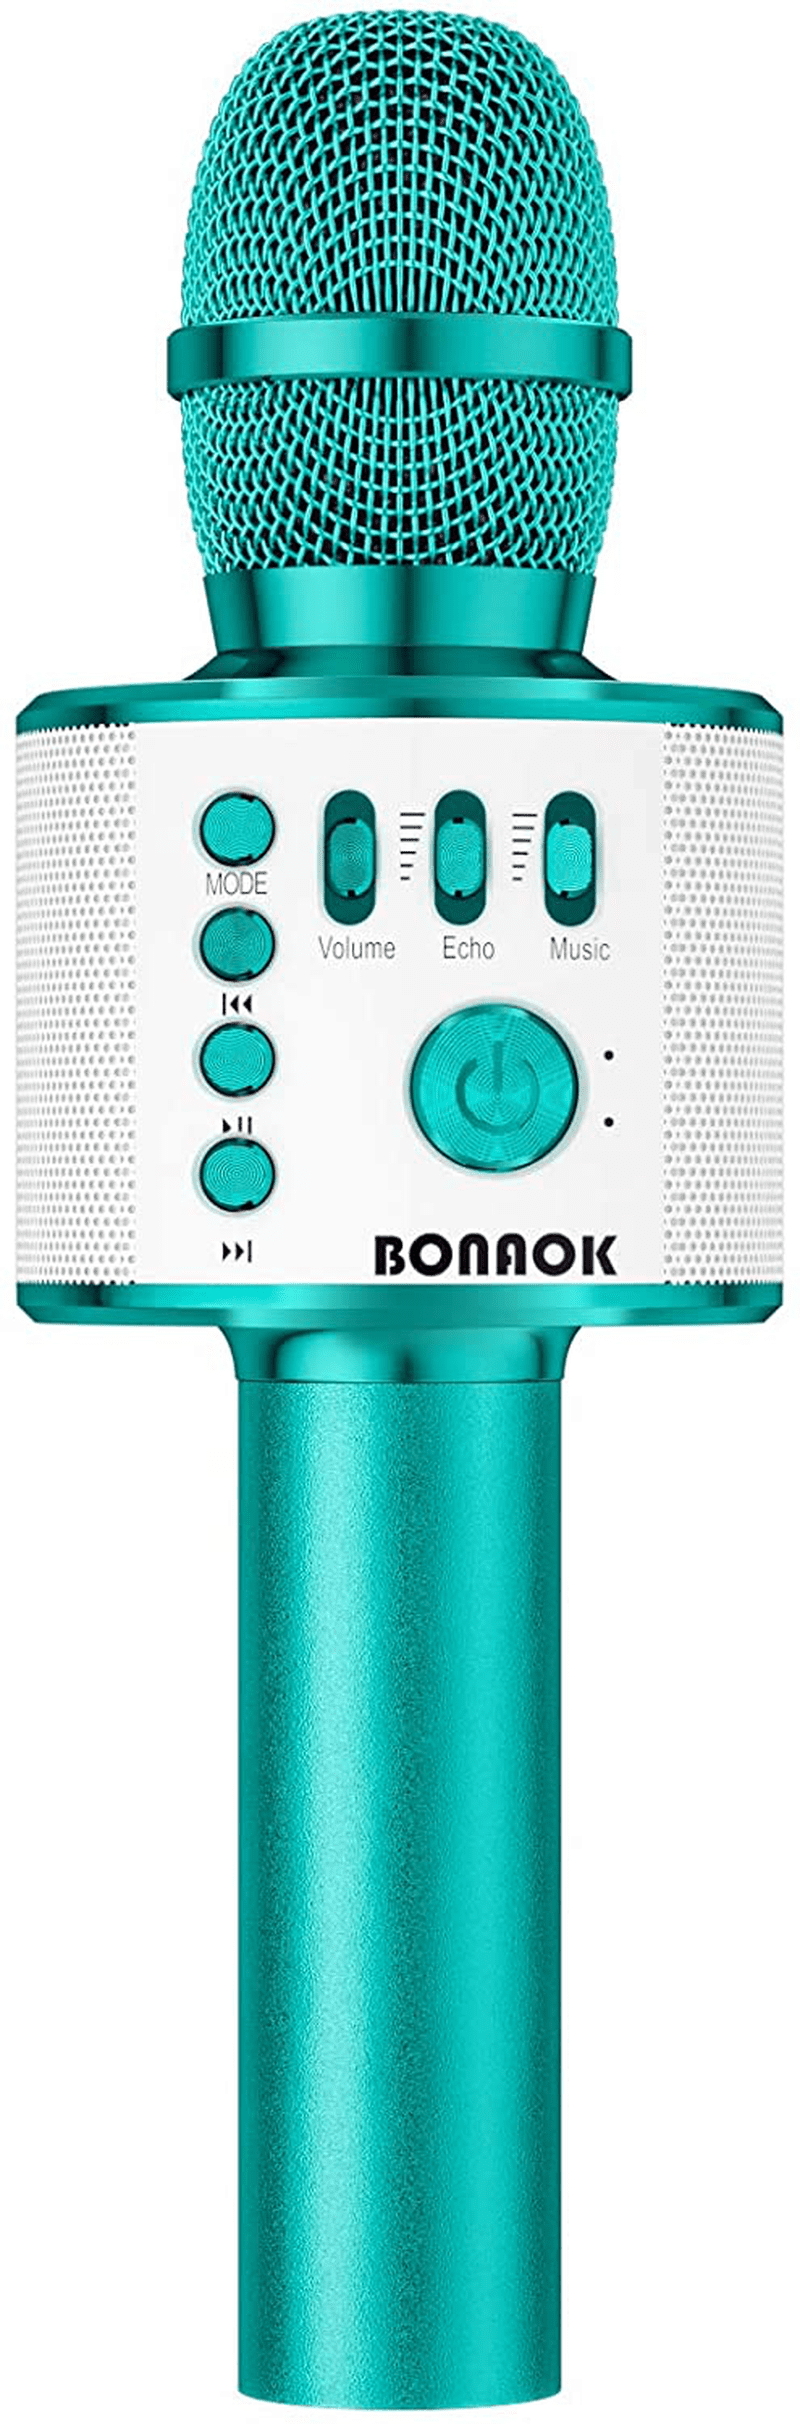 Portable Karaoke Machine Mic Speaker for Kids and Adults Home Party Birthday Rose Red BONAOK Karaoke Microphone Bluetooth Wireless